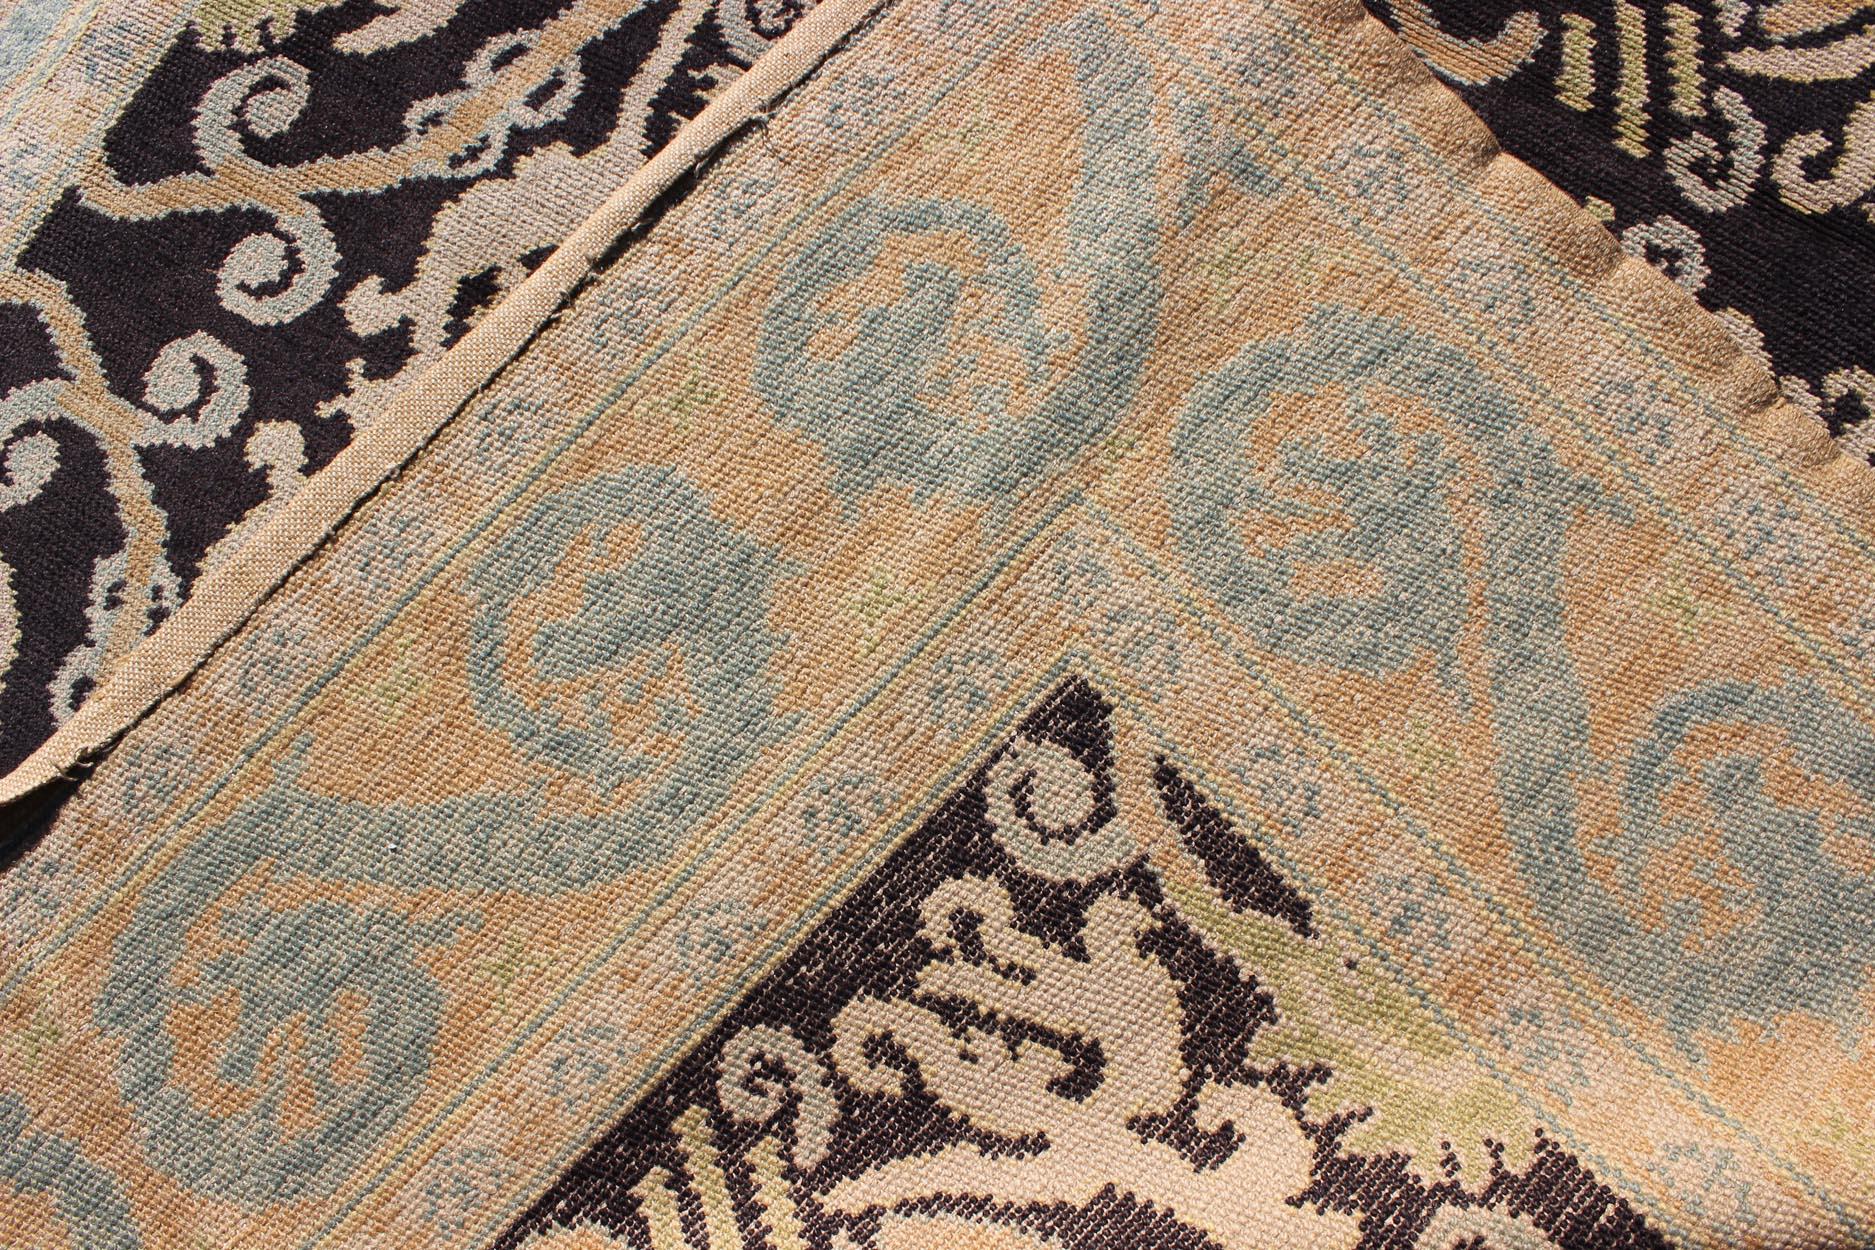 spanish style rugs